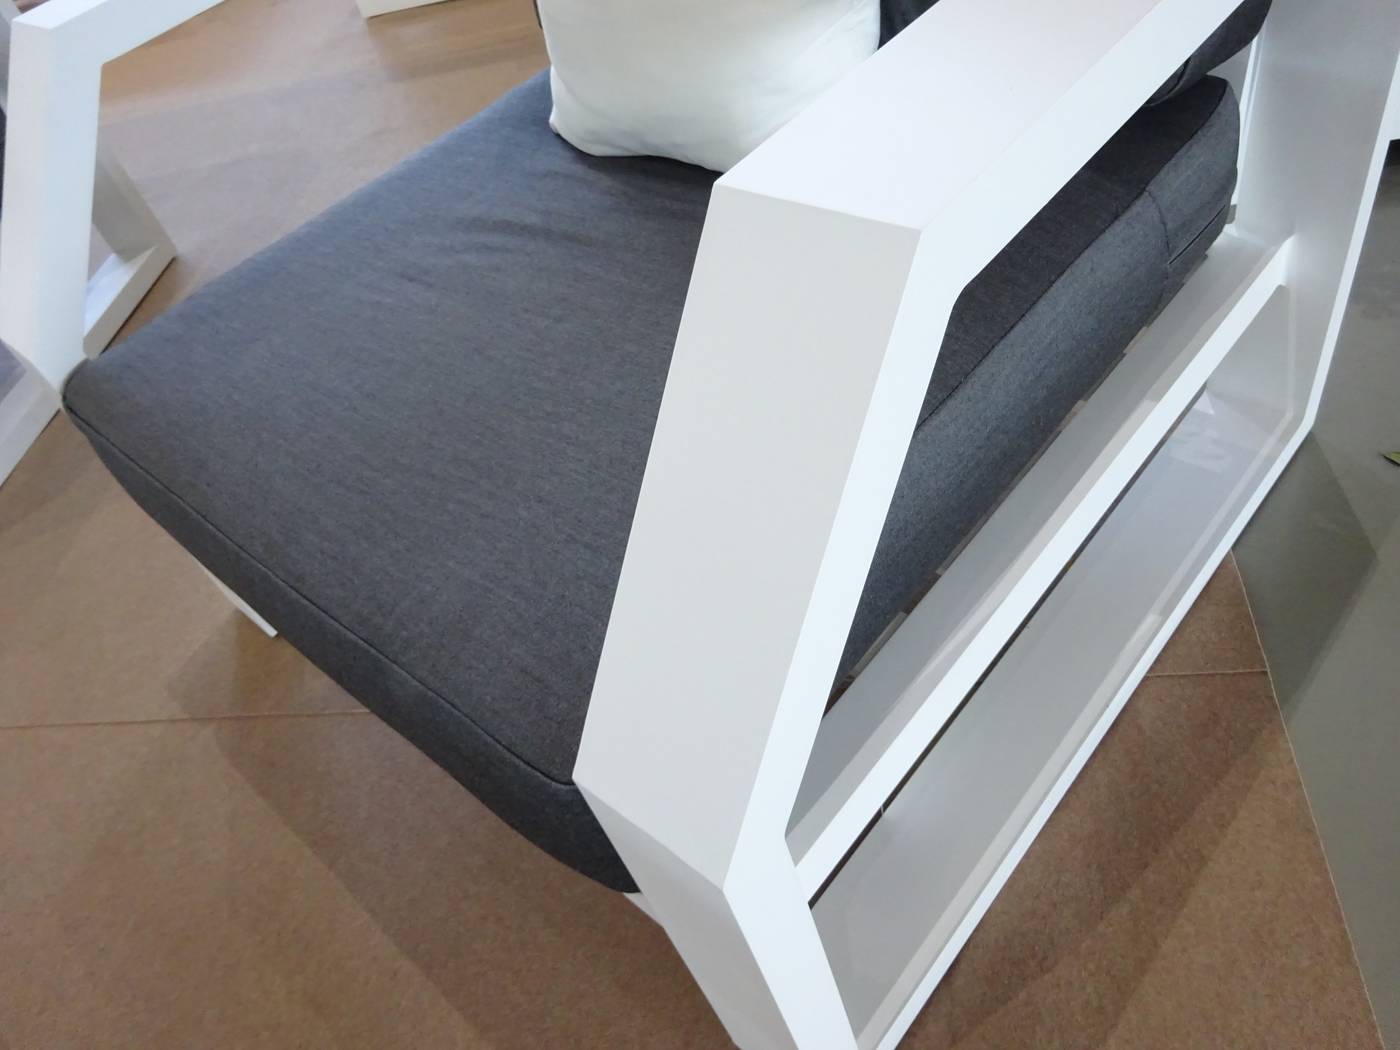 Set Aluminio Luxe Zafiro-10 - Conjunto lujo de aluminio: 1 sofá de 3 plazas + 2 sillones + 1 mesa de centro + 2 reposapiés + cojines.